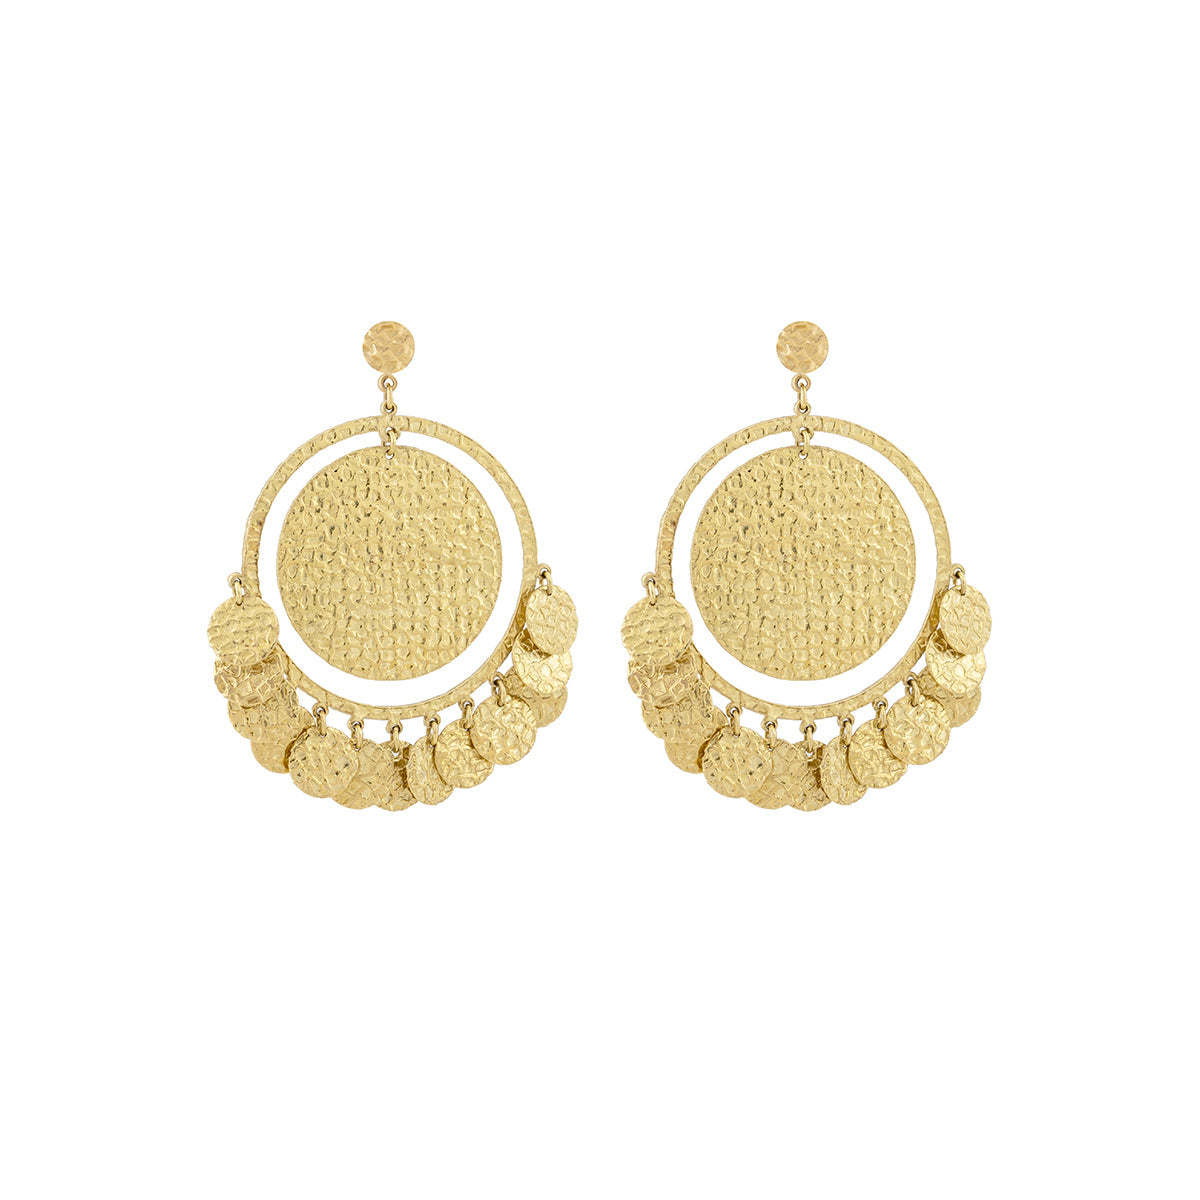 el-mawardy-jewelry-Coin-Drop-Earrings-in-18K-Yellow-gold